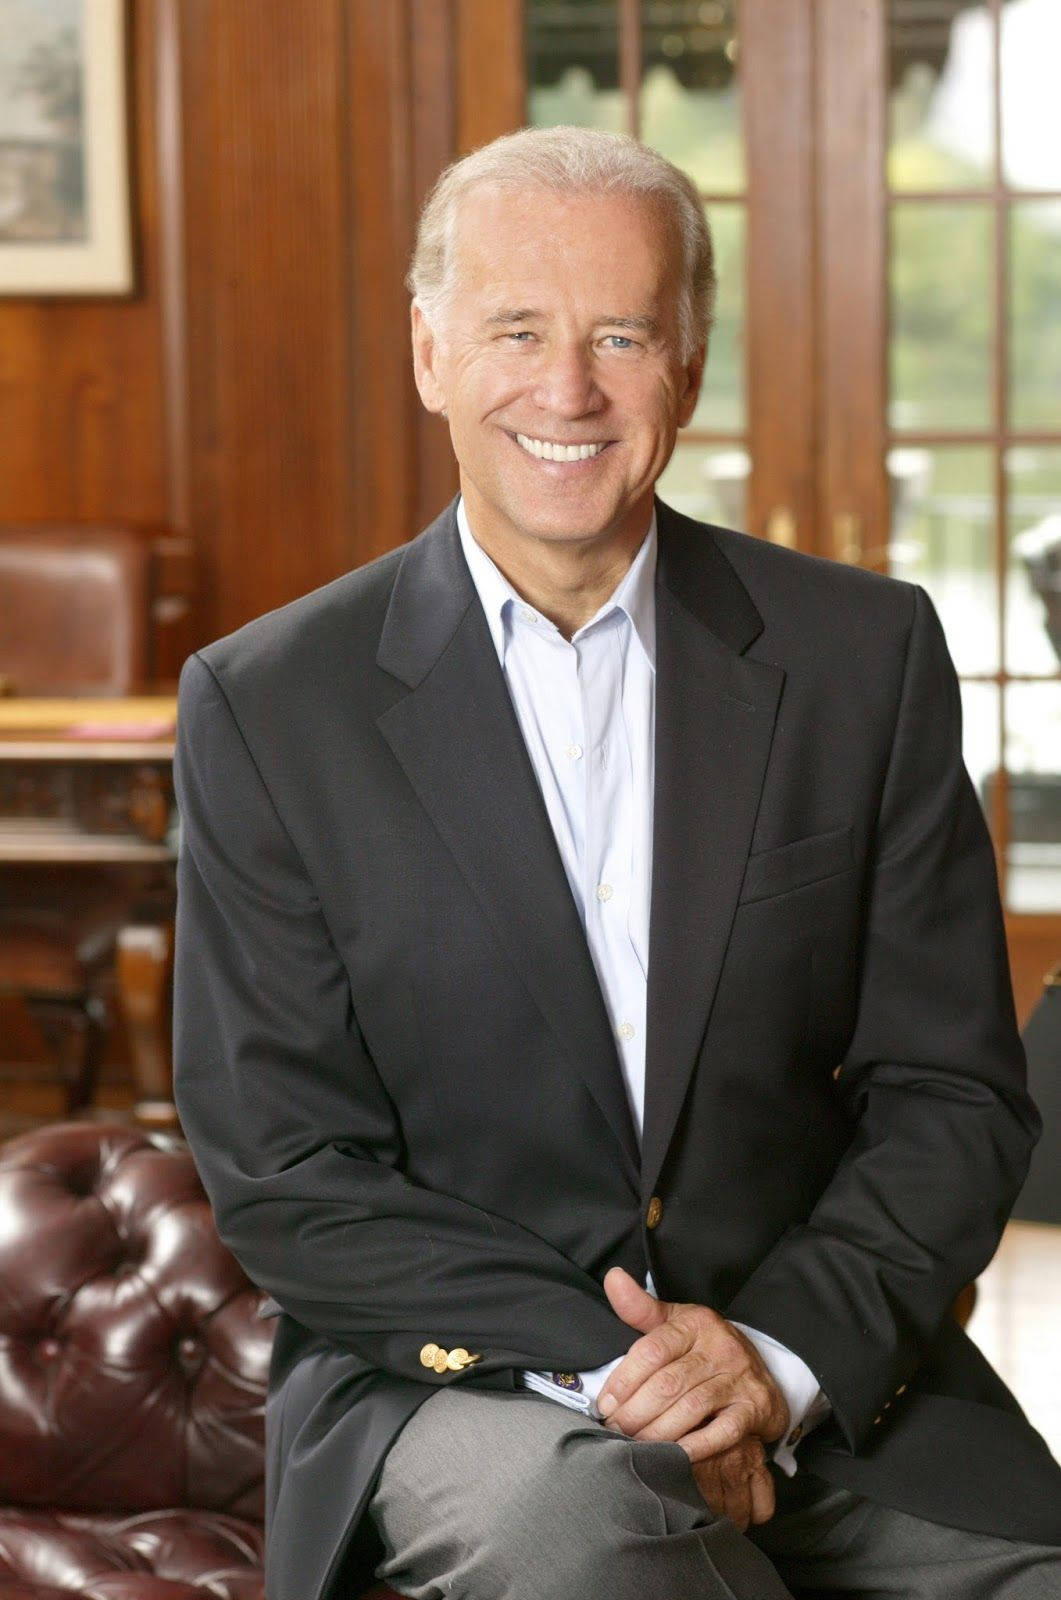 Joe Biden, smiling during his 2020 campaign Wallpaper